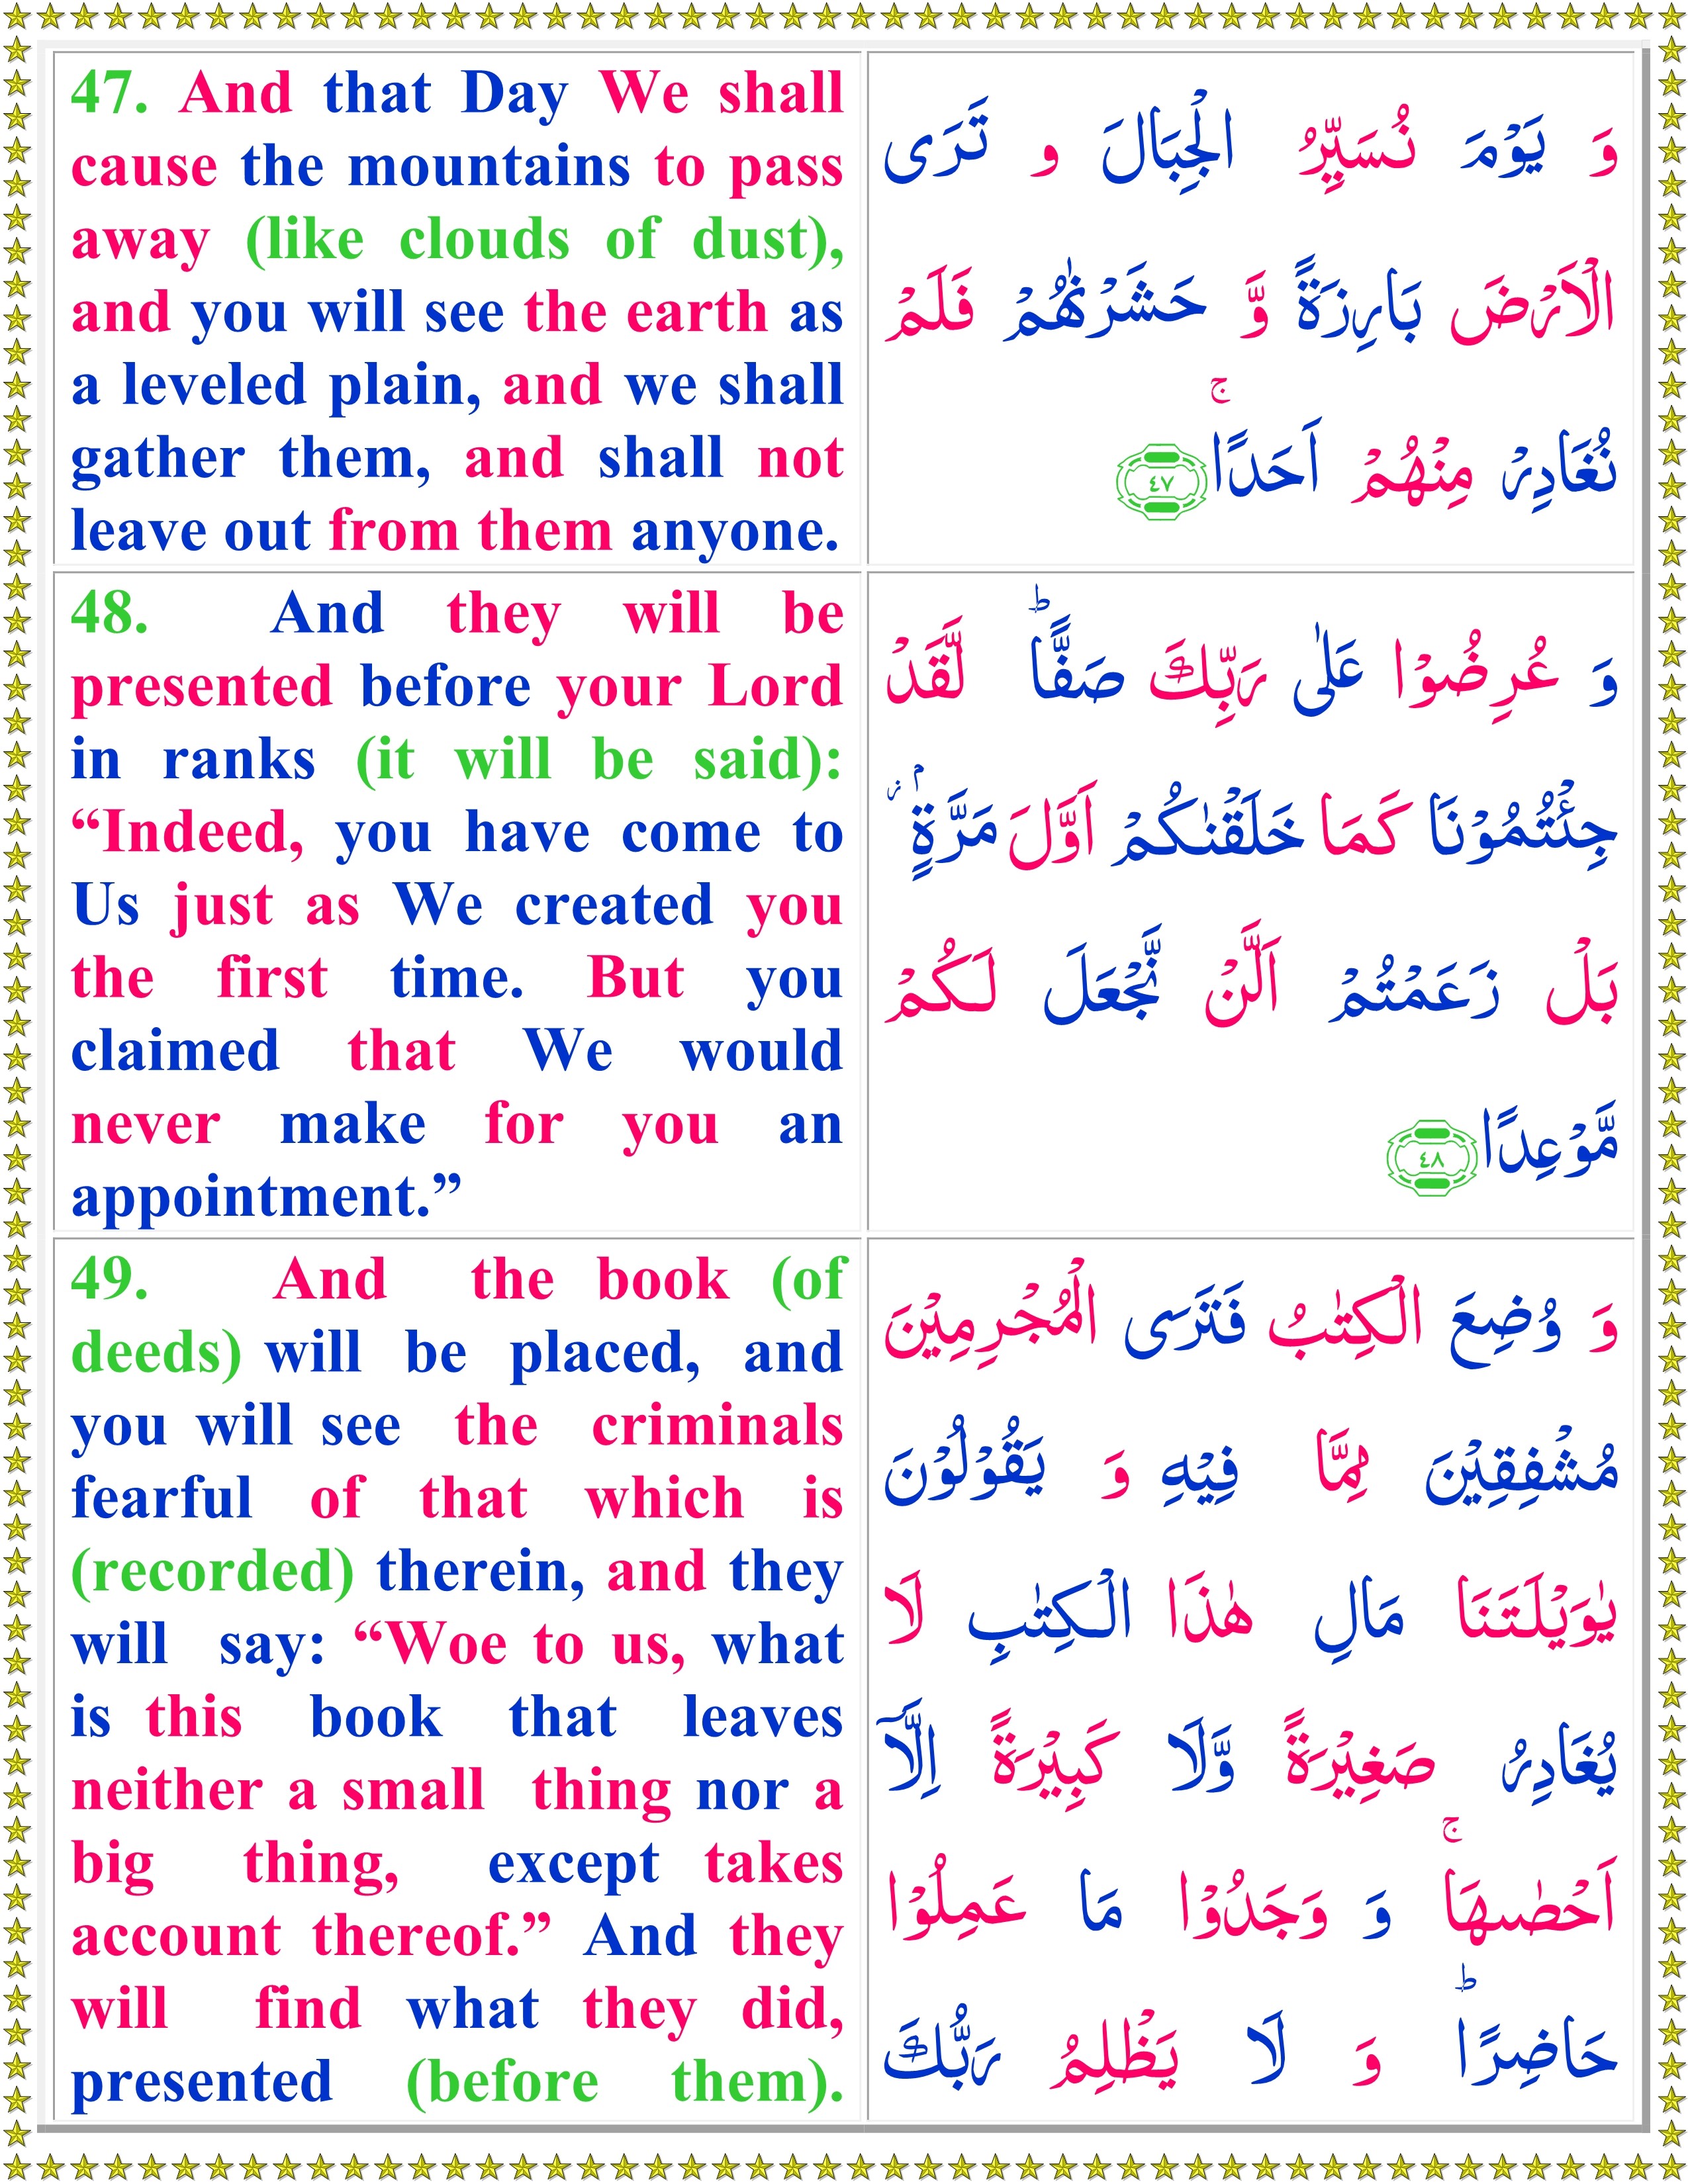 Read Surah Al Kahf With English Translation - Page 2 of 3 - Quran o Sunnat